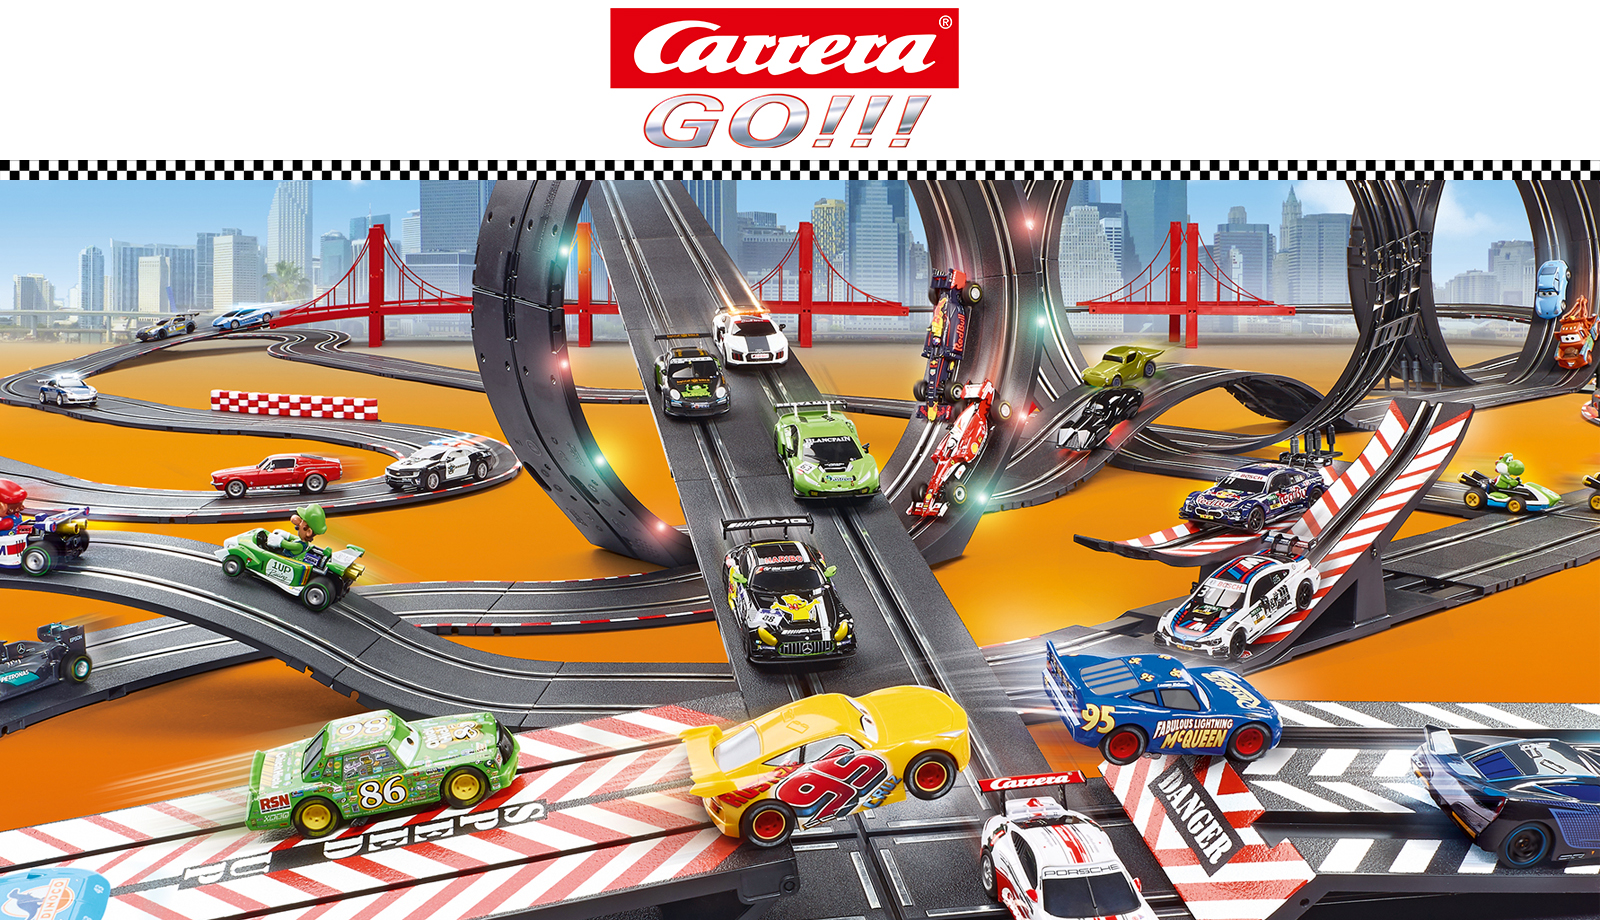 Carrera Carrera 20062546 - Speed Competition 5,3m 